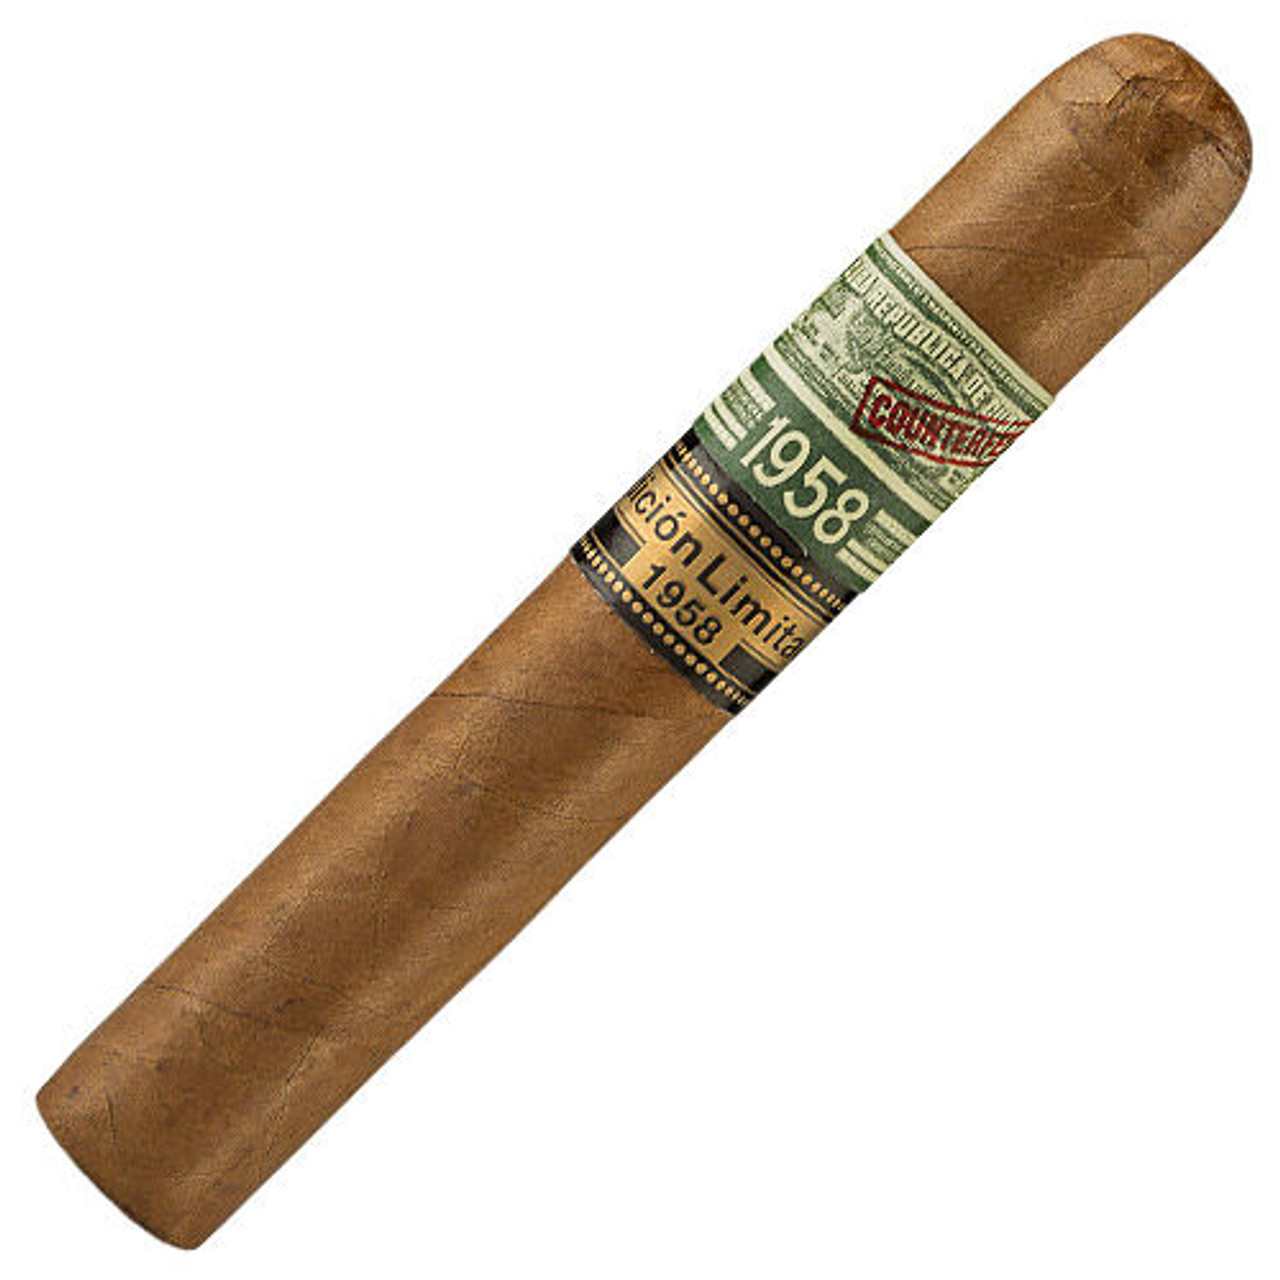 Genuine Pre-Embargo C.C. Sun Grown 1958 Epicure Cigars - 5 x 50 Single